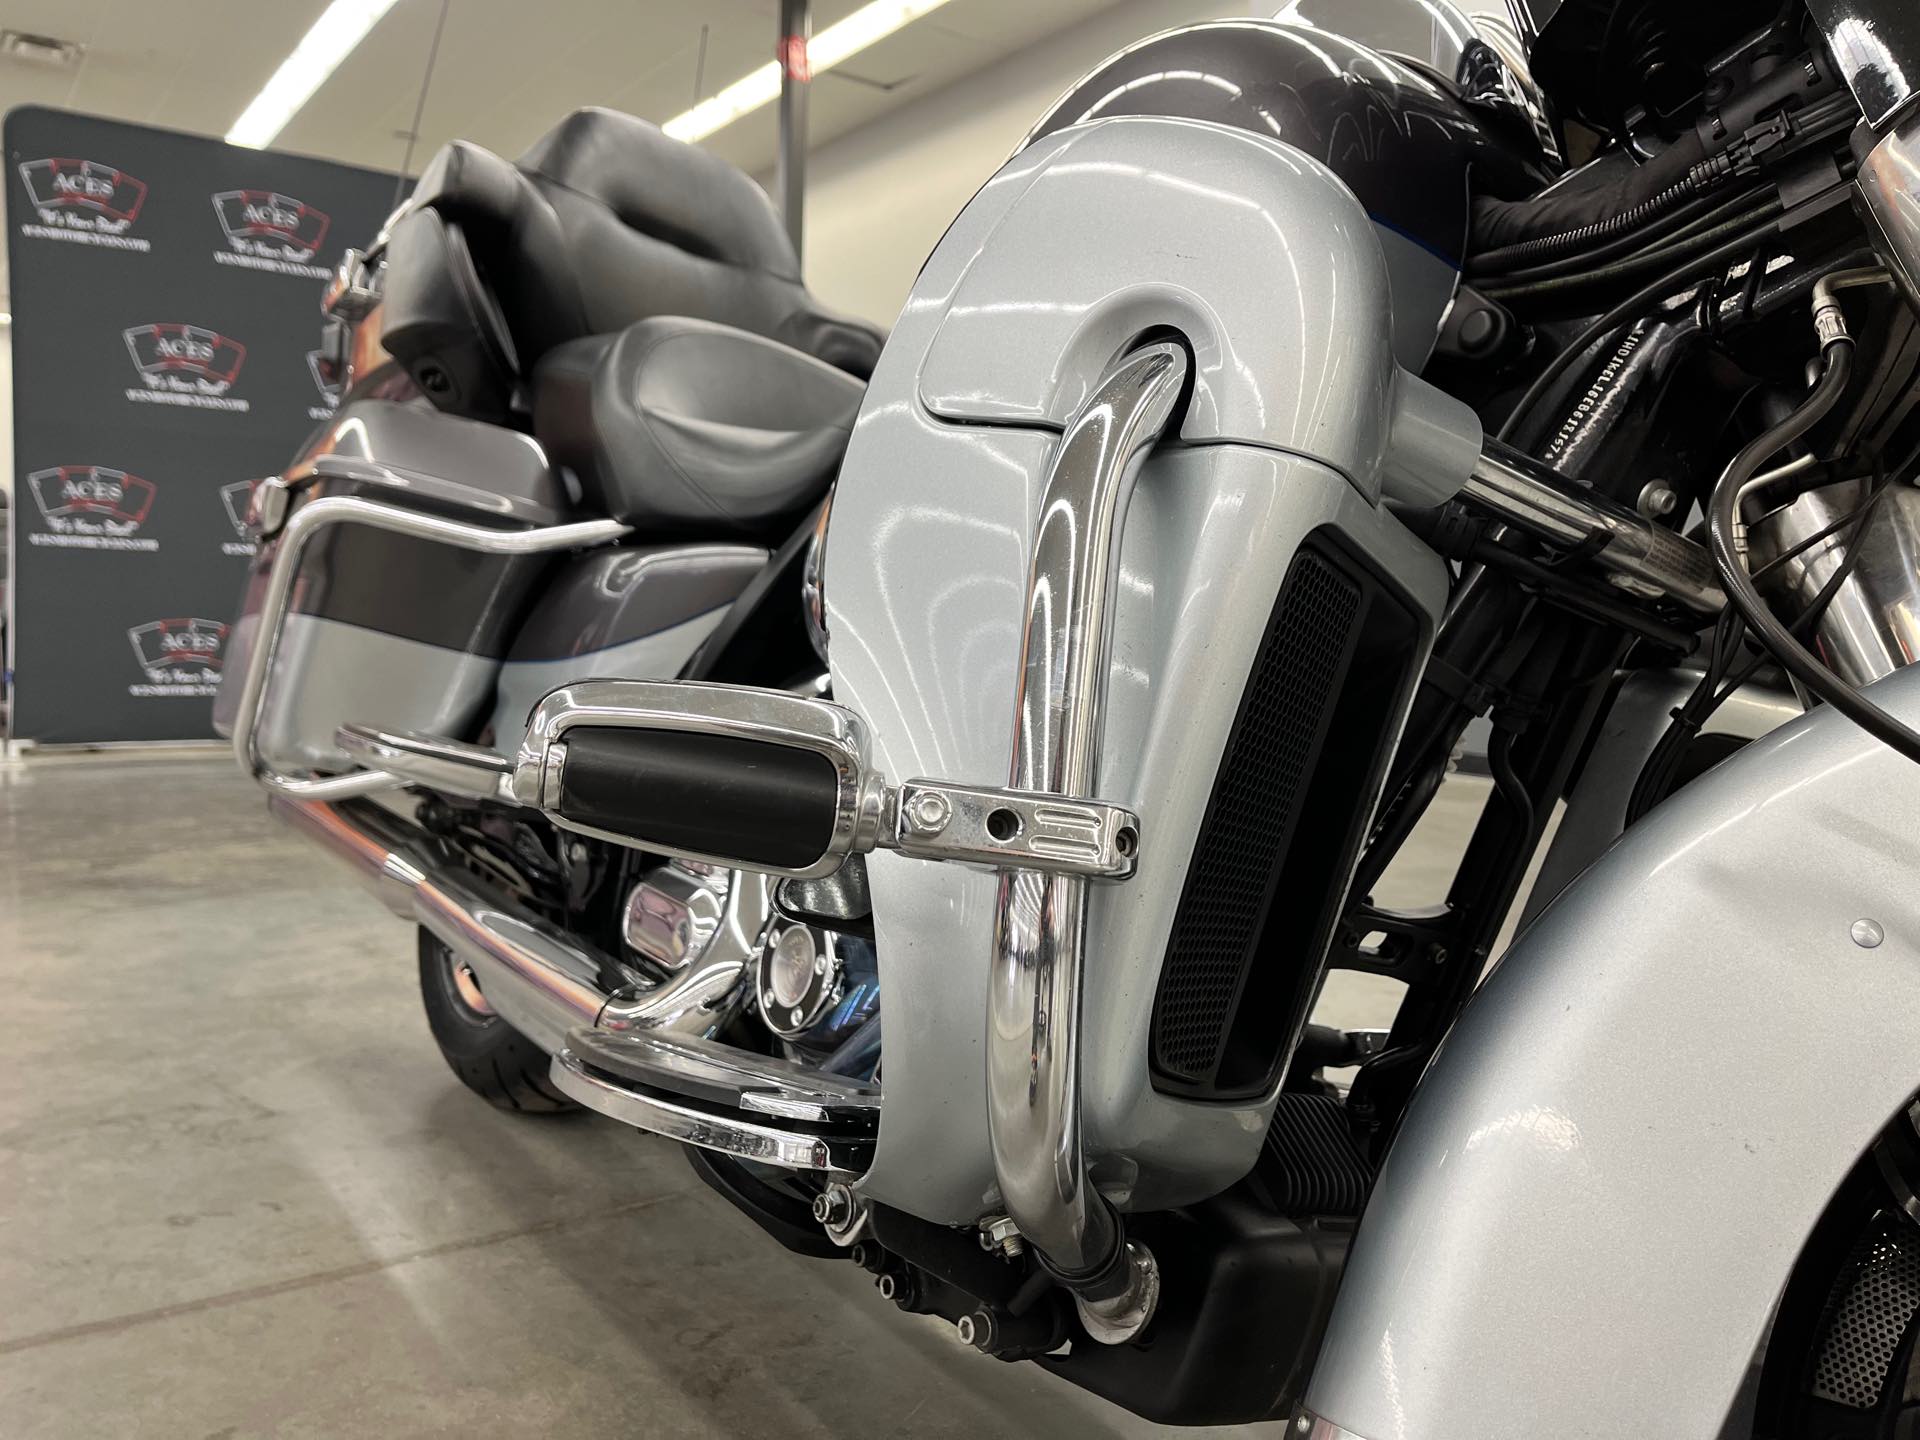 2014 Harley-Davidson Electra Glide Ultra Limited at Aces Motorcycles - Denver